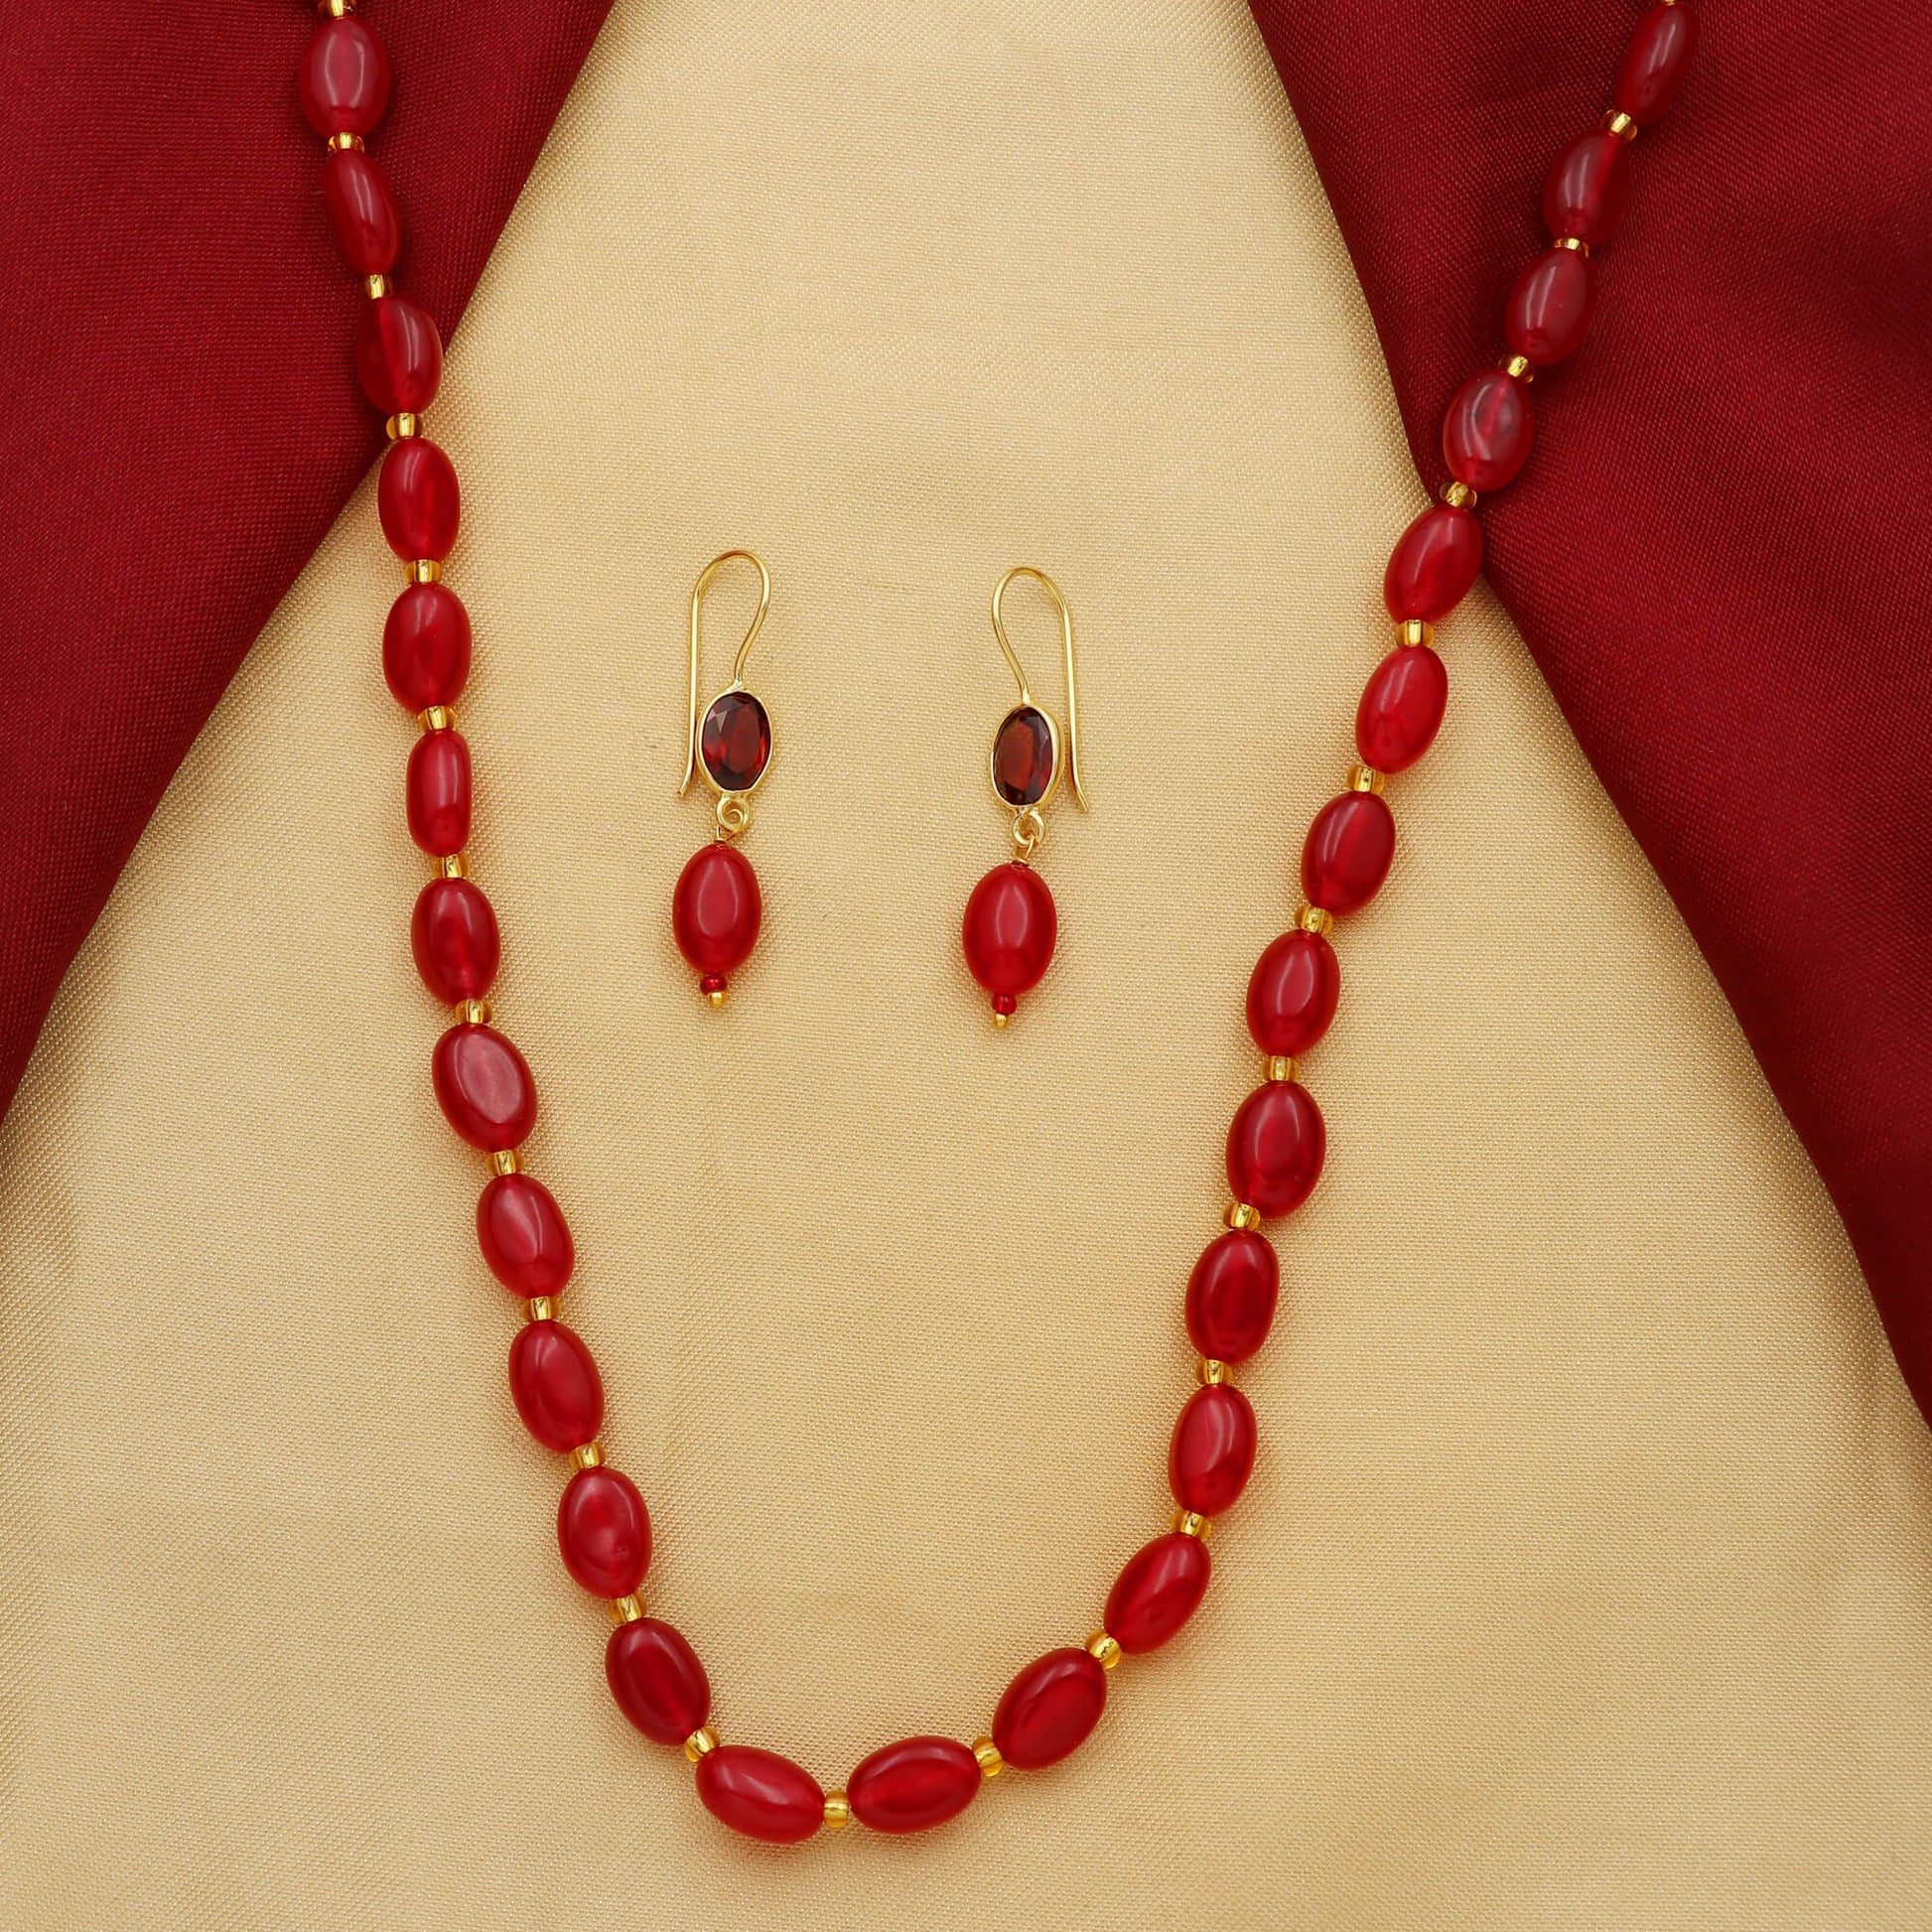 Garnets Beads Necklace - ThewaStore